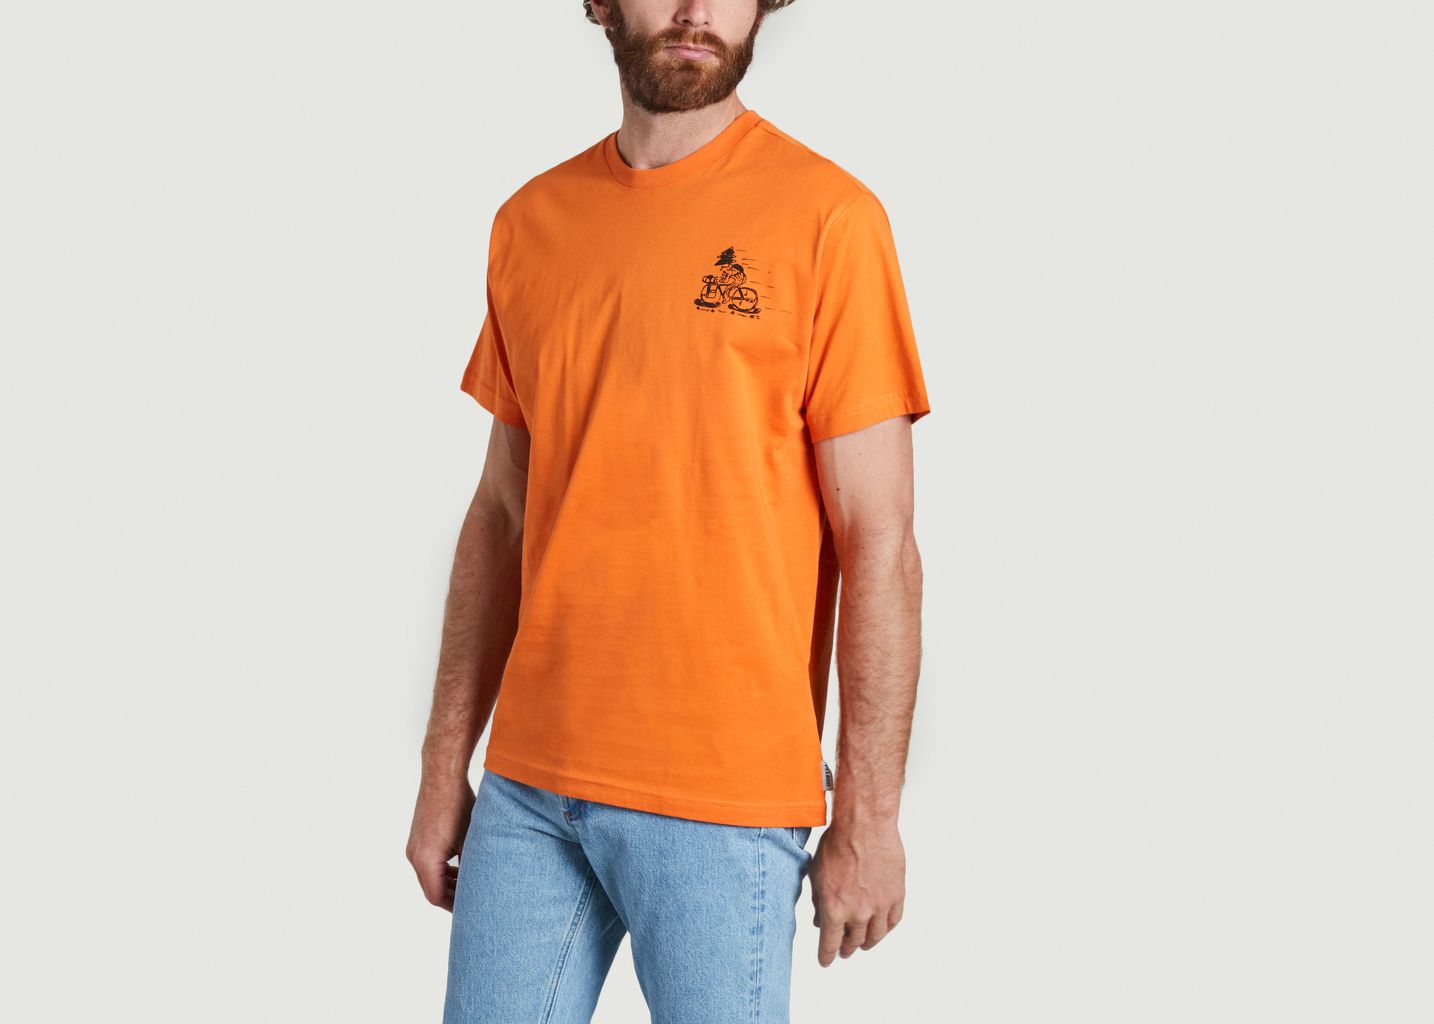 Pelago Graphic T-shirt - Element